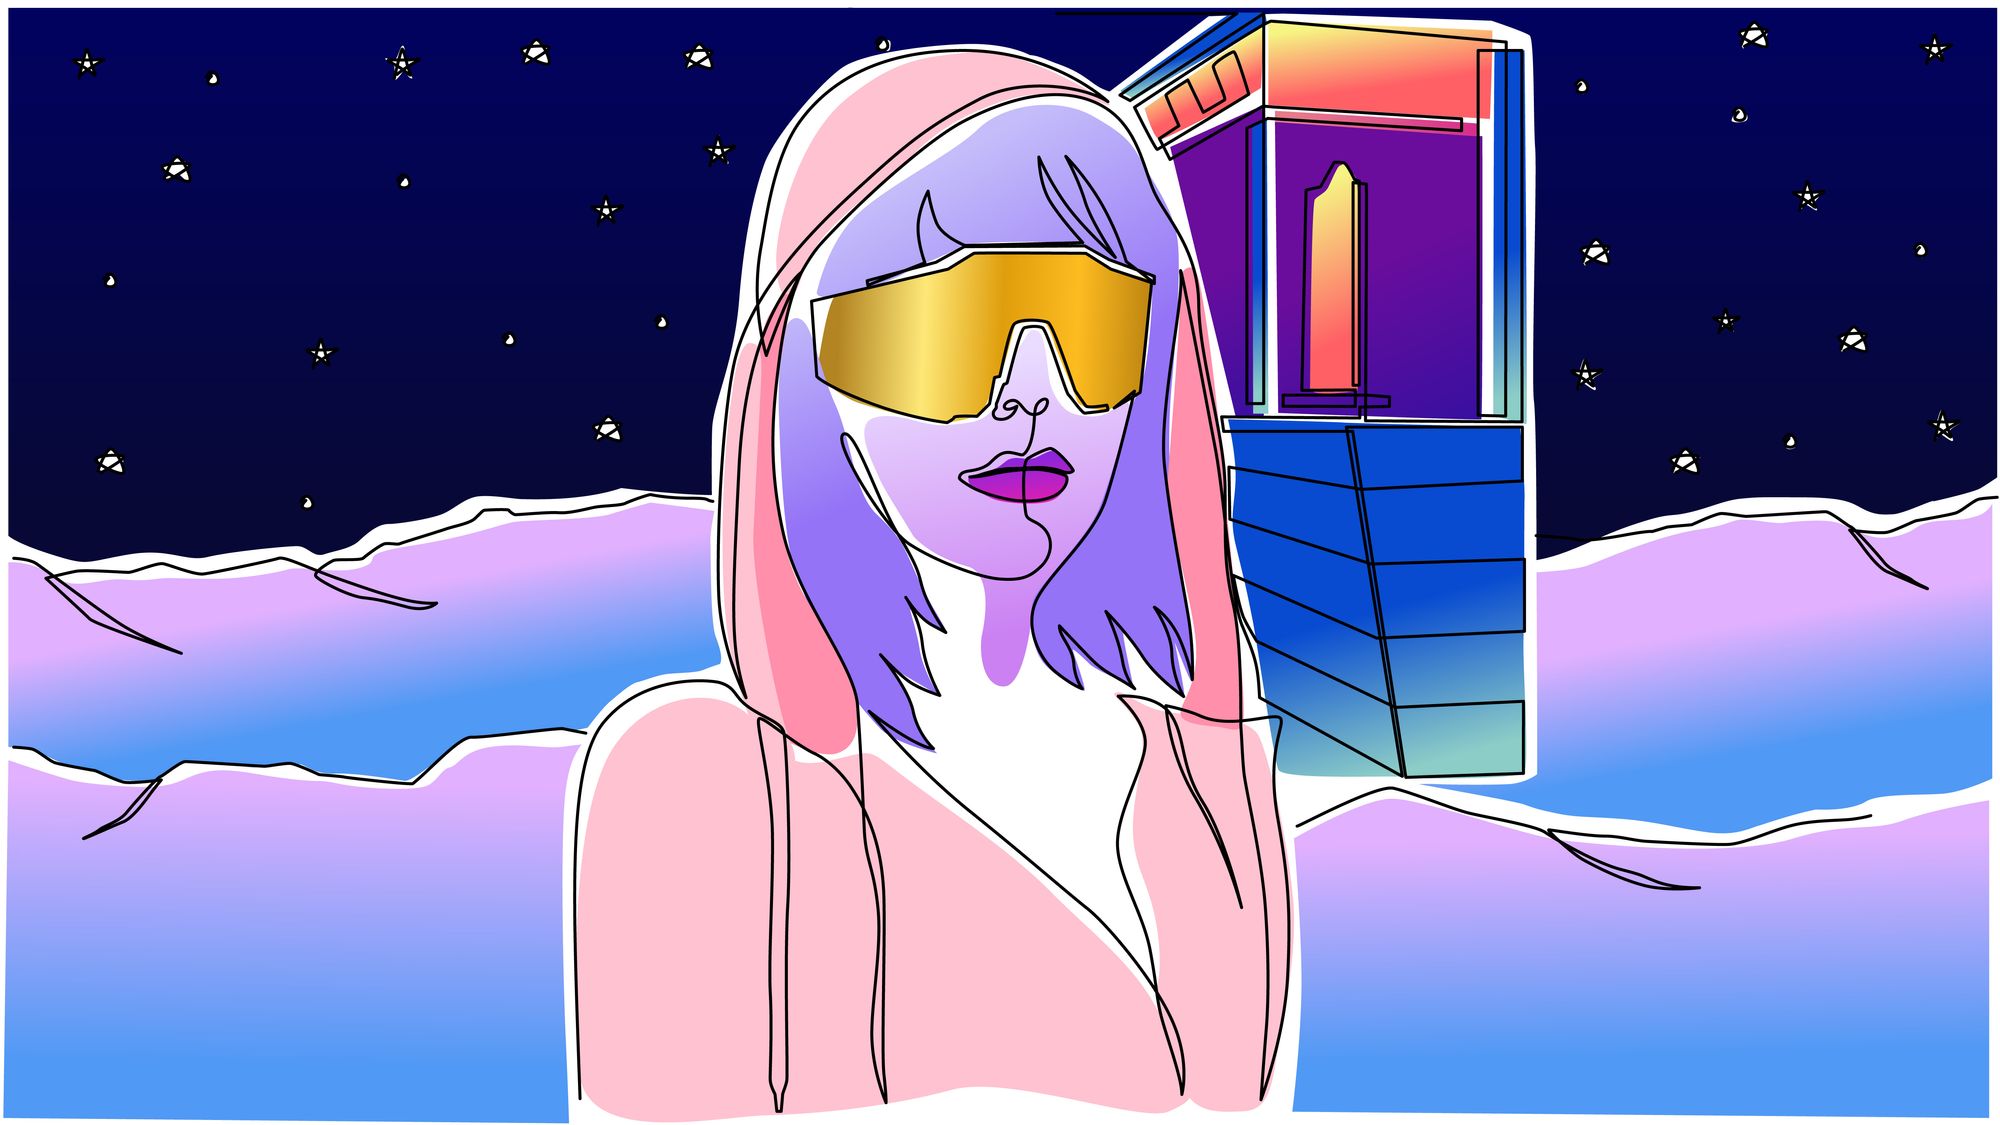 Illustration of Moni’s profile at Moni-07b, a new alien world. 